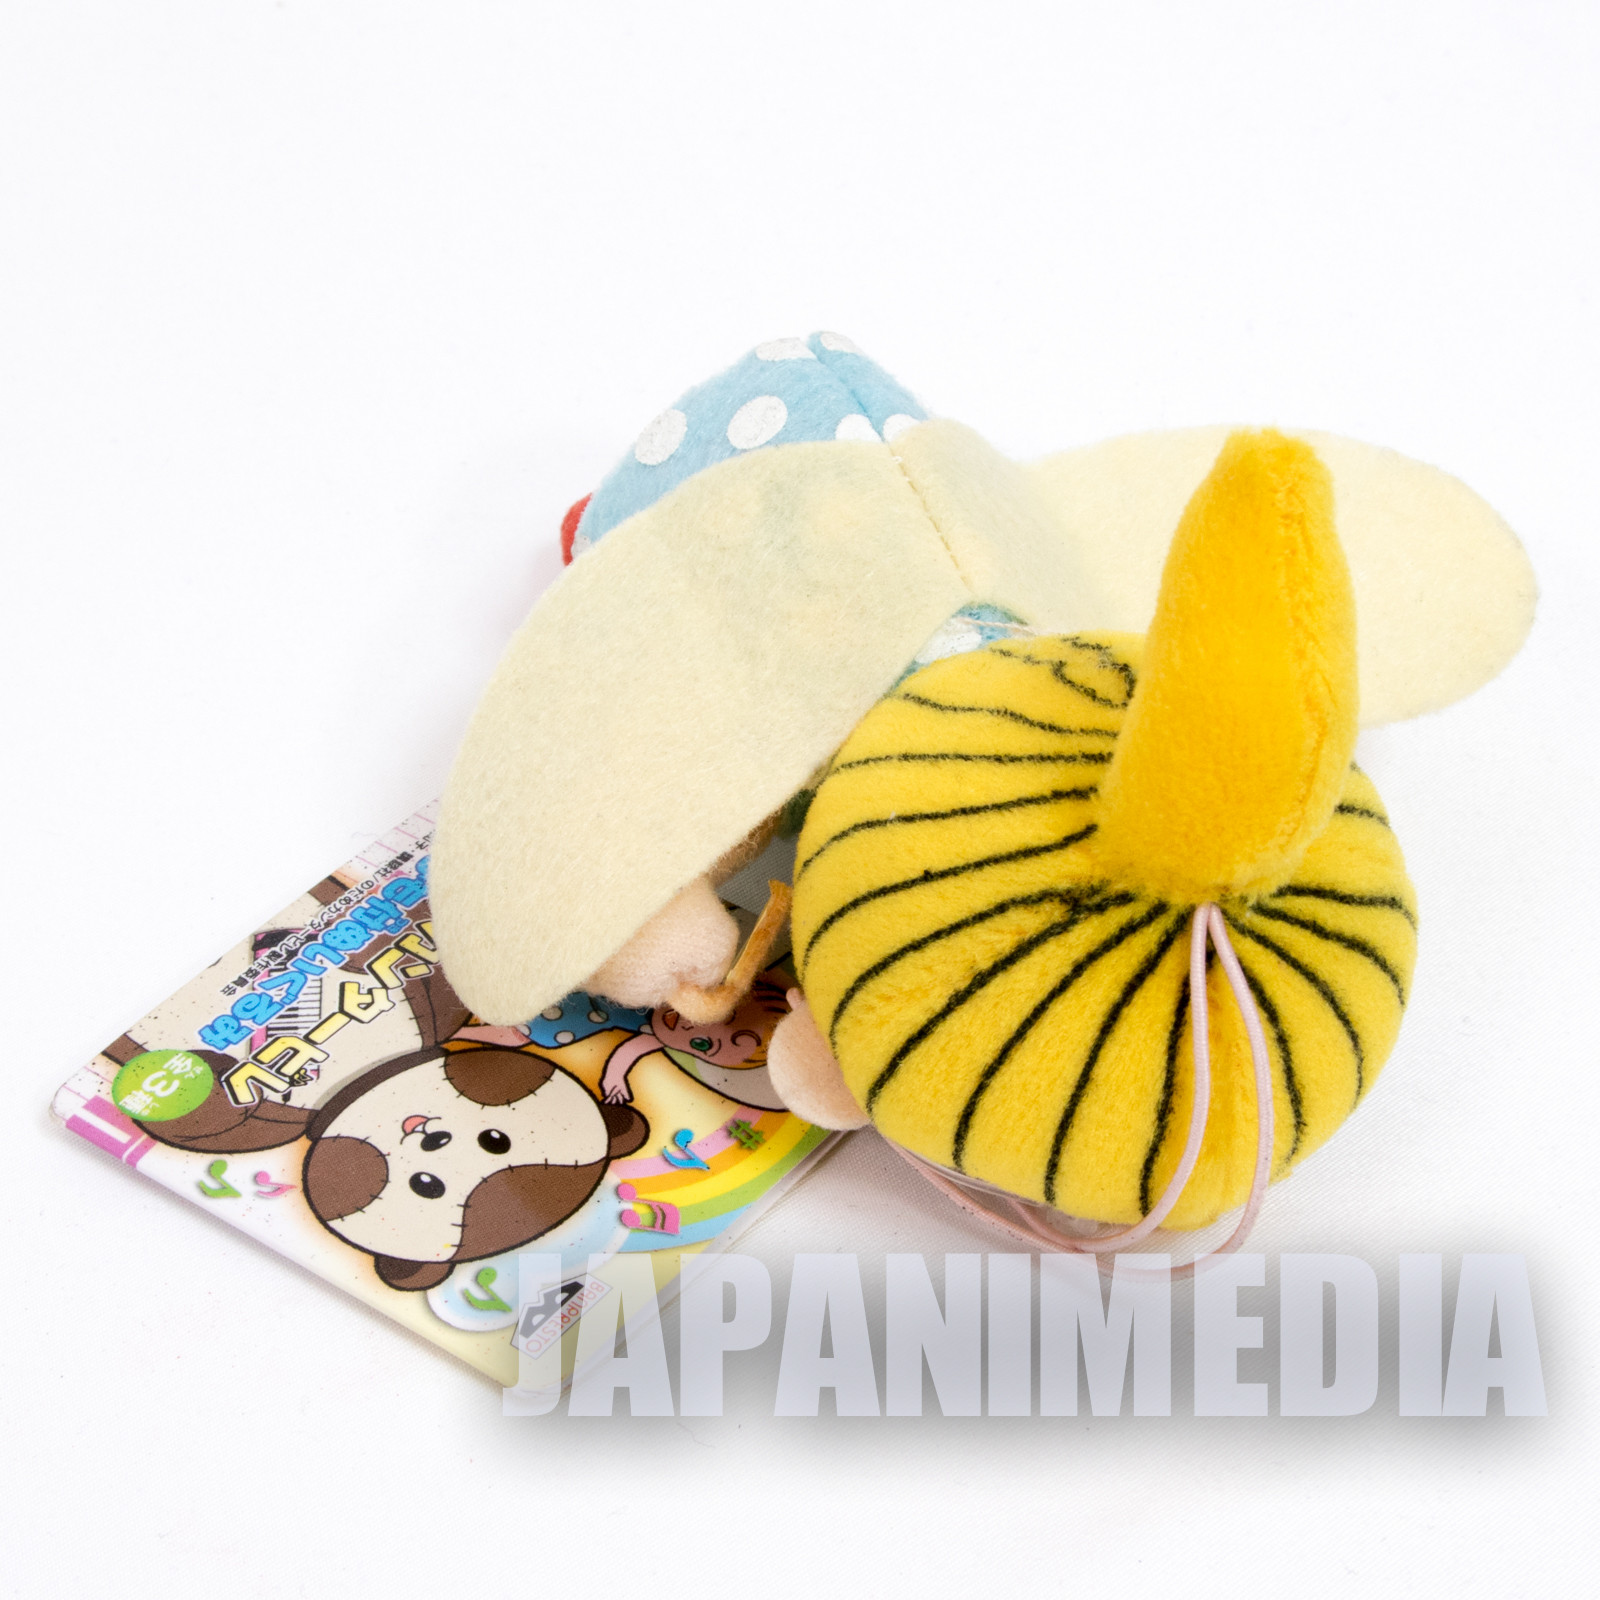 Nodame Cantabile Fairy Puririn Plush Doll Strap JAPAN ANIME